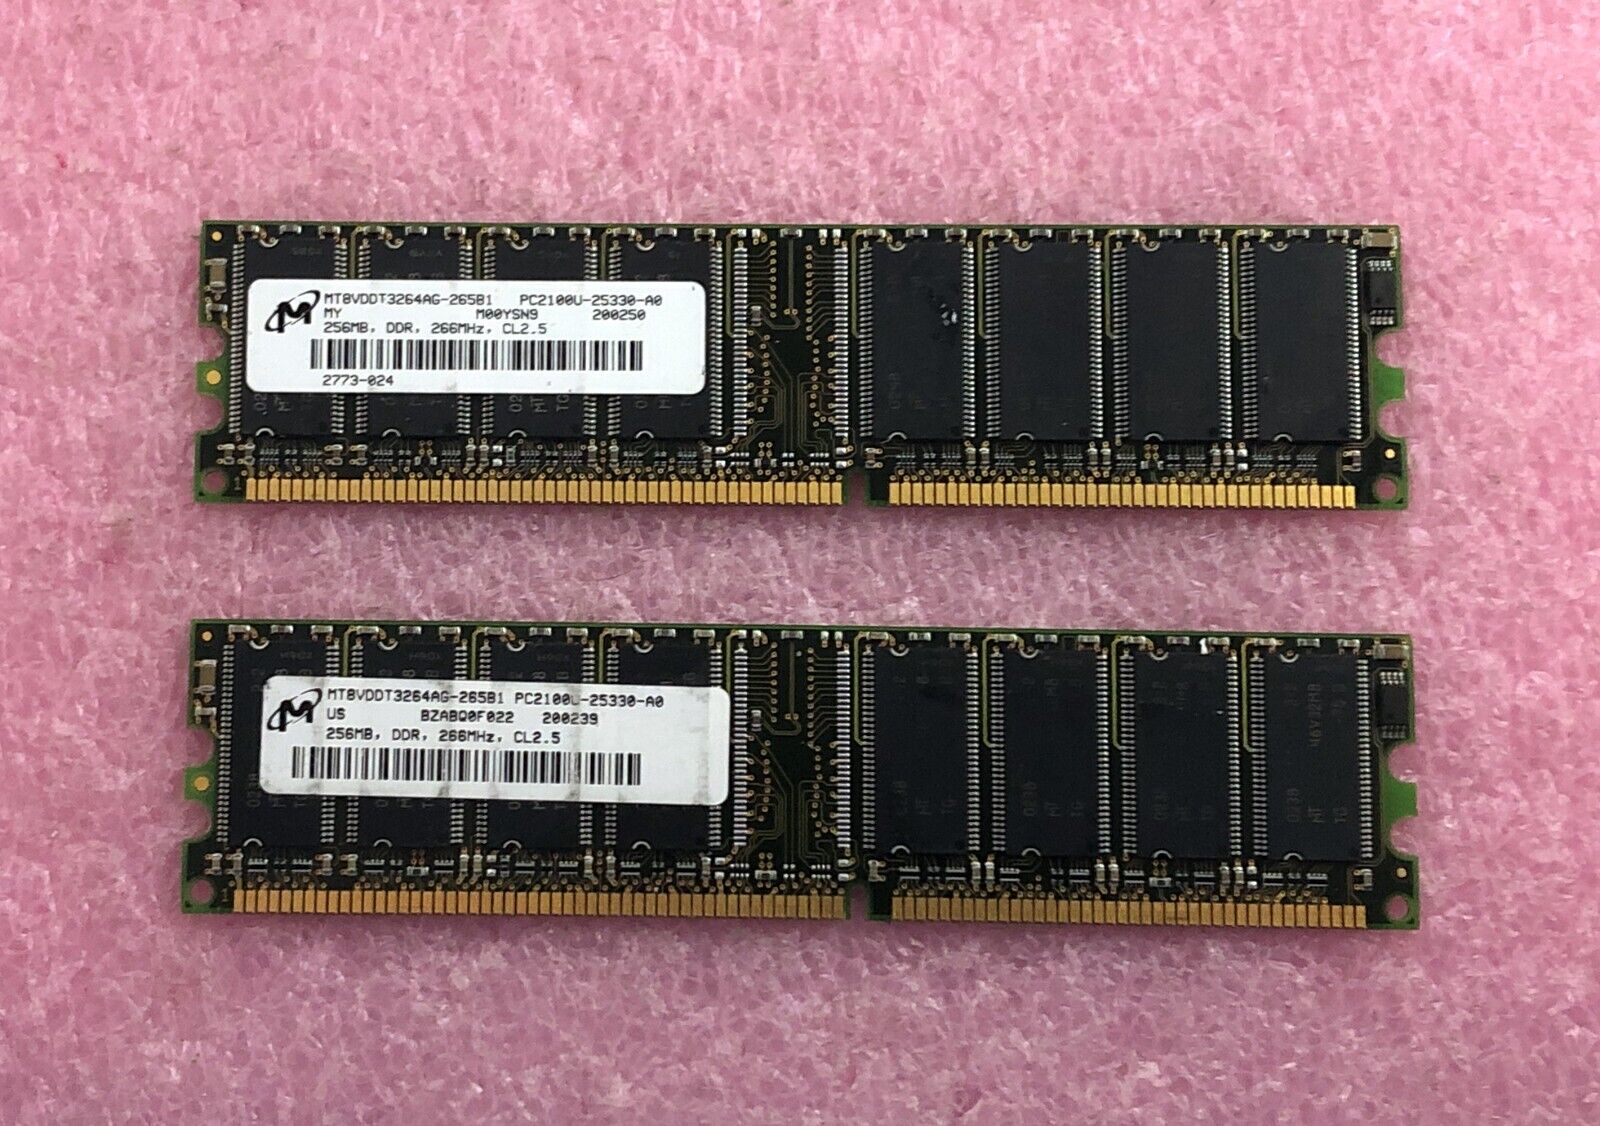 2 X 256MB MICRON DDR266 PC2100 NON-ECC MEMORY MT8VDDT3264AG-265B1 - 512MB TOTAL